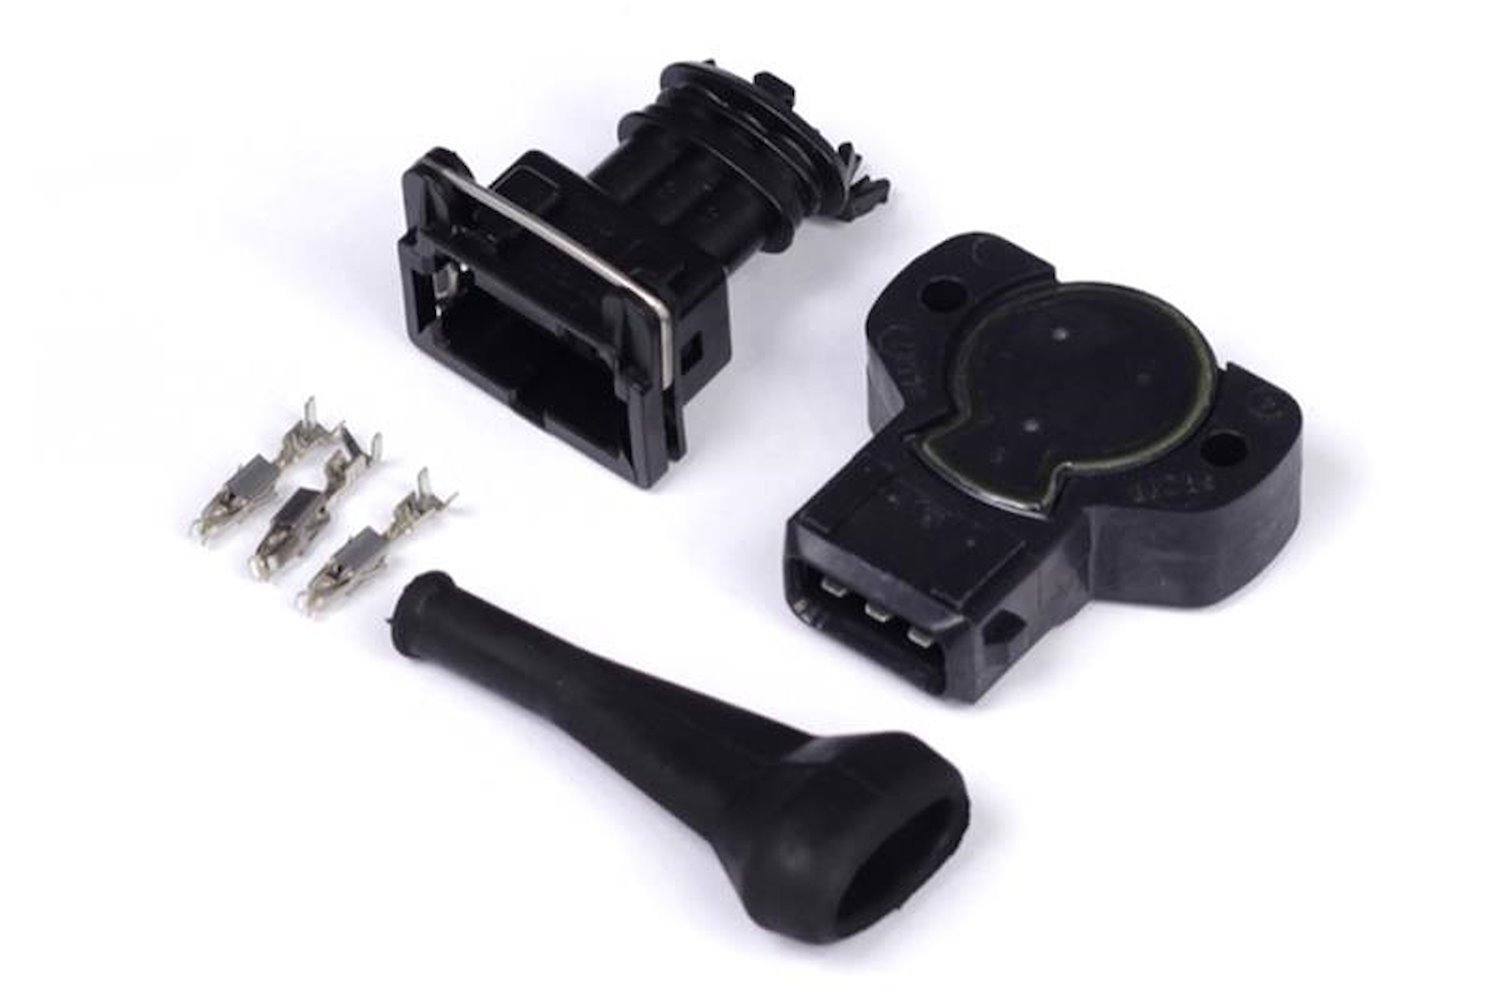 HT-010404 Throttle Position Sensor, Black CCW Rotation 8 mm D-Shaft